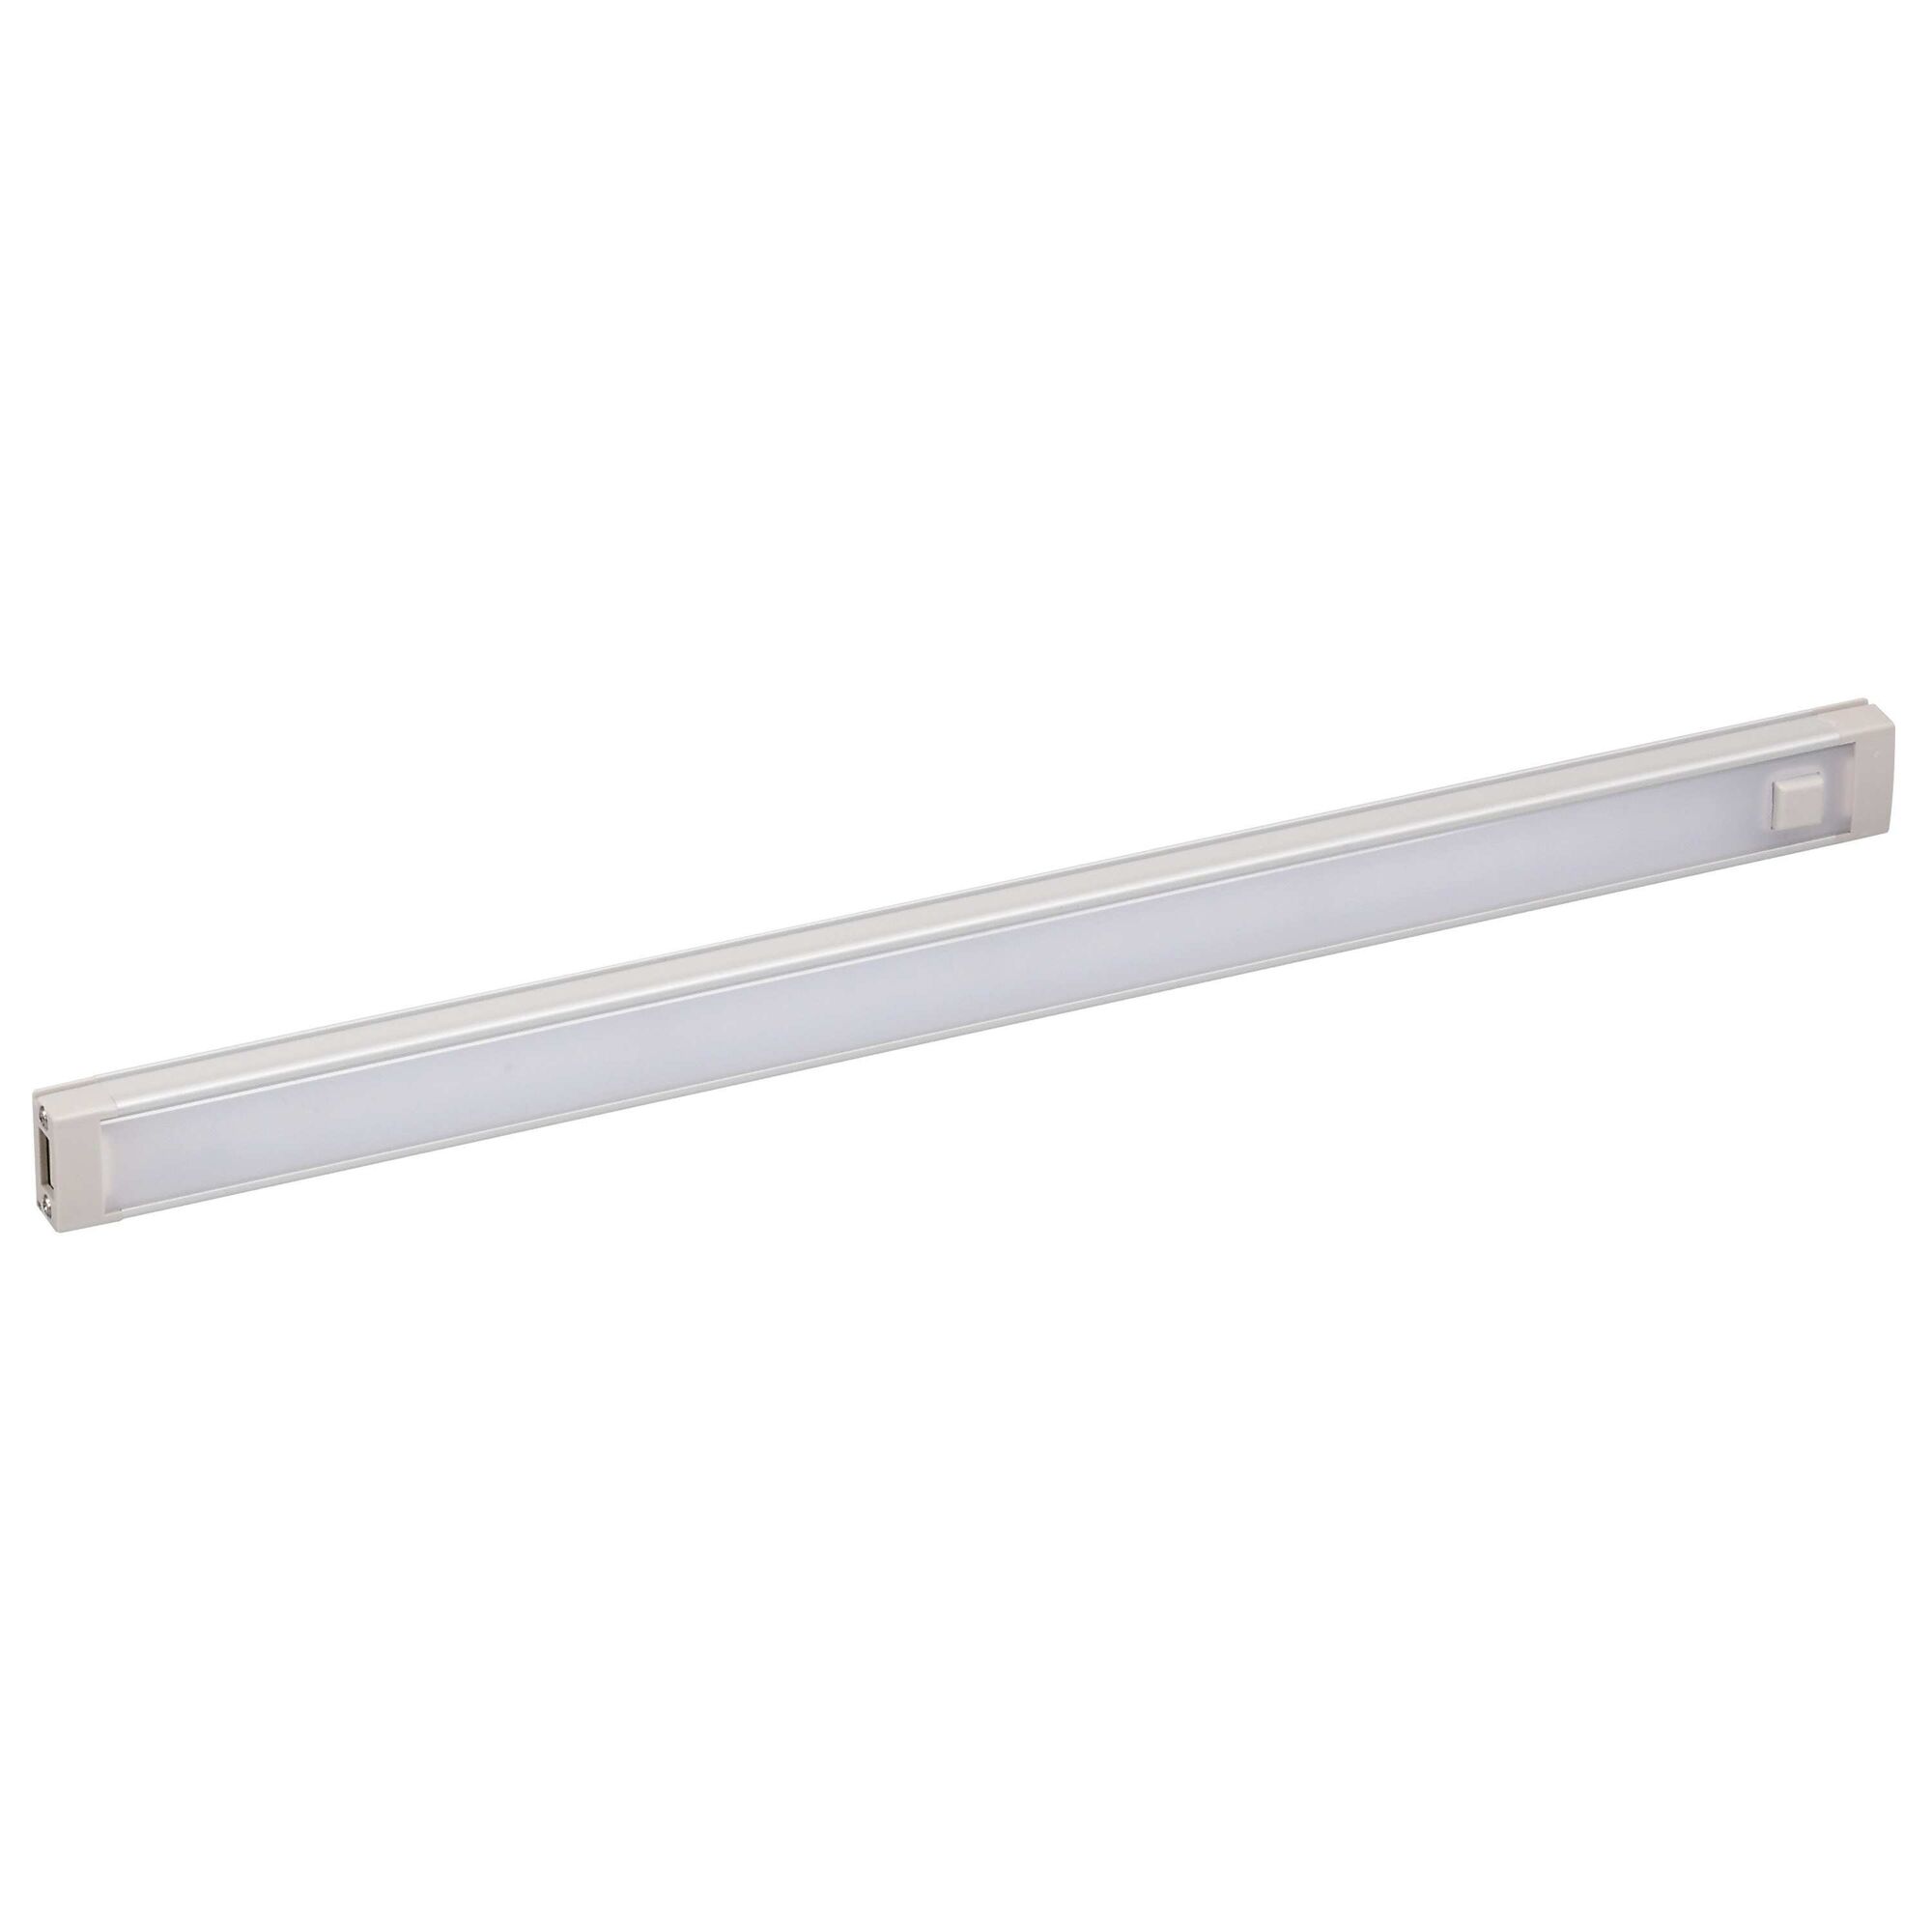 Profile of 12 inch 1 bar LED under cabinet light.